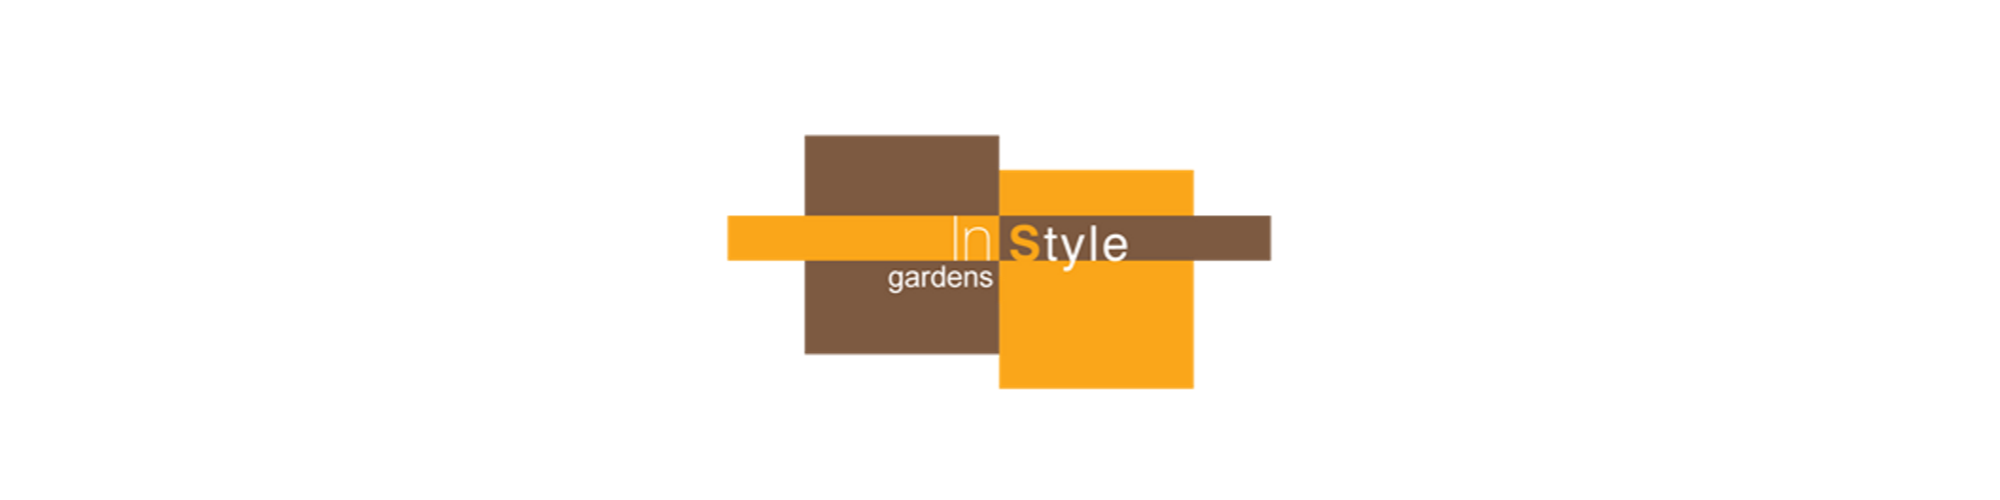 InStyle Gardens by Joel Barnett is taking the landscape gardening industry by storm